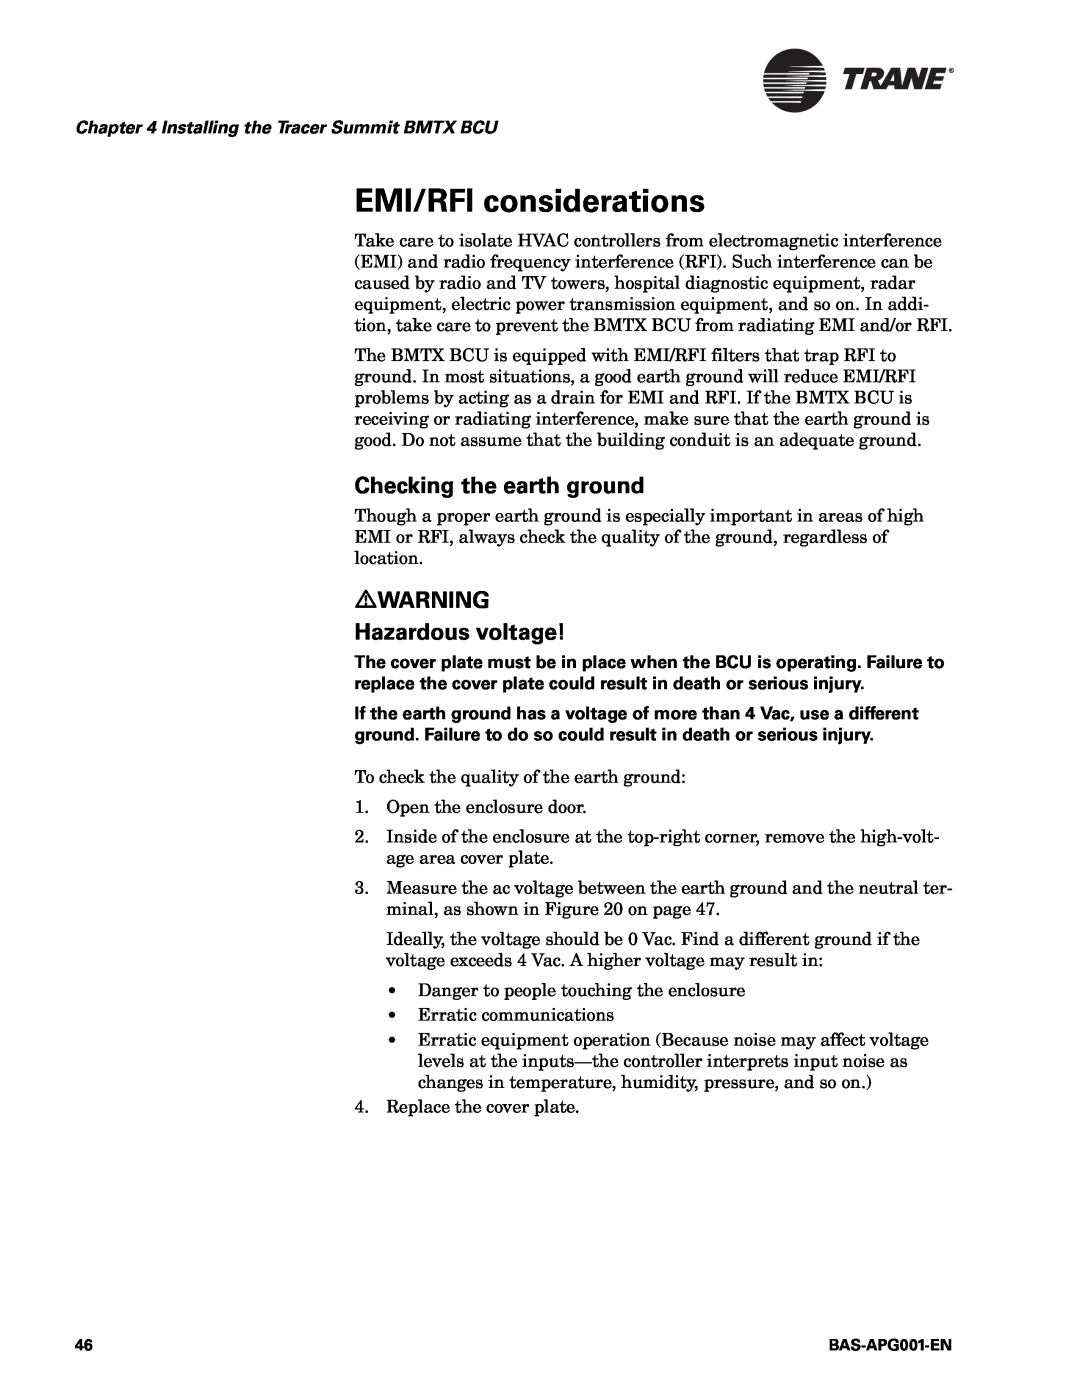 Trane BAS-APG001-EN manual EMI/RFI considerations, Checking the earth ground, Hazardous voltage 